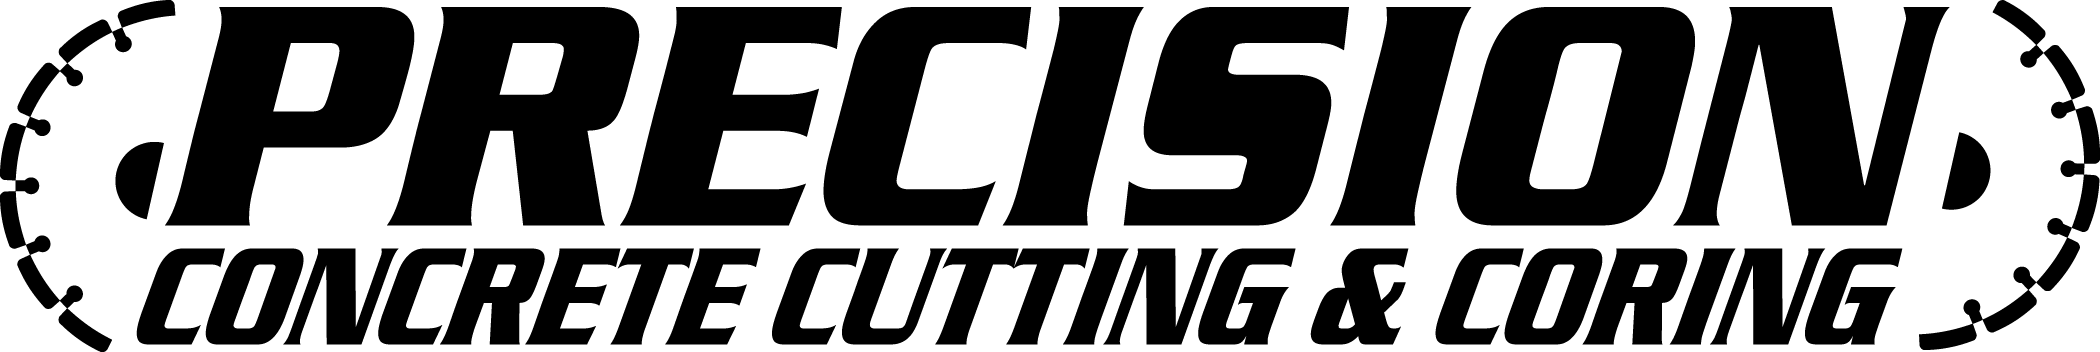 Precision Cutting & Coring, LLC